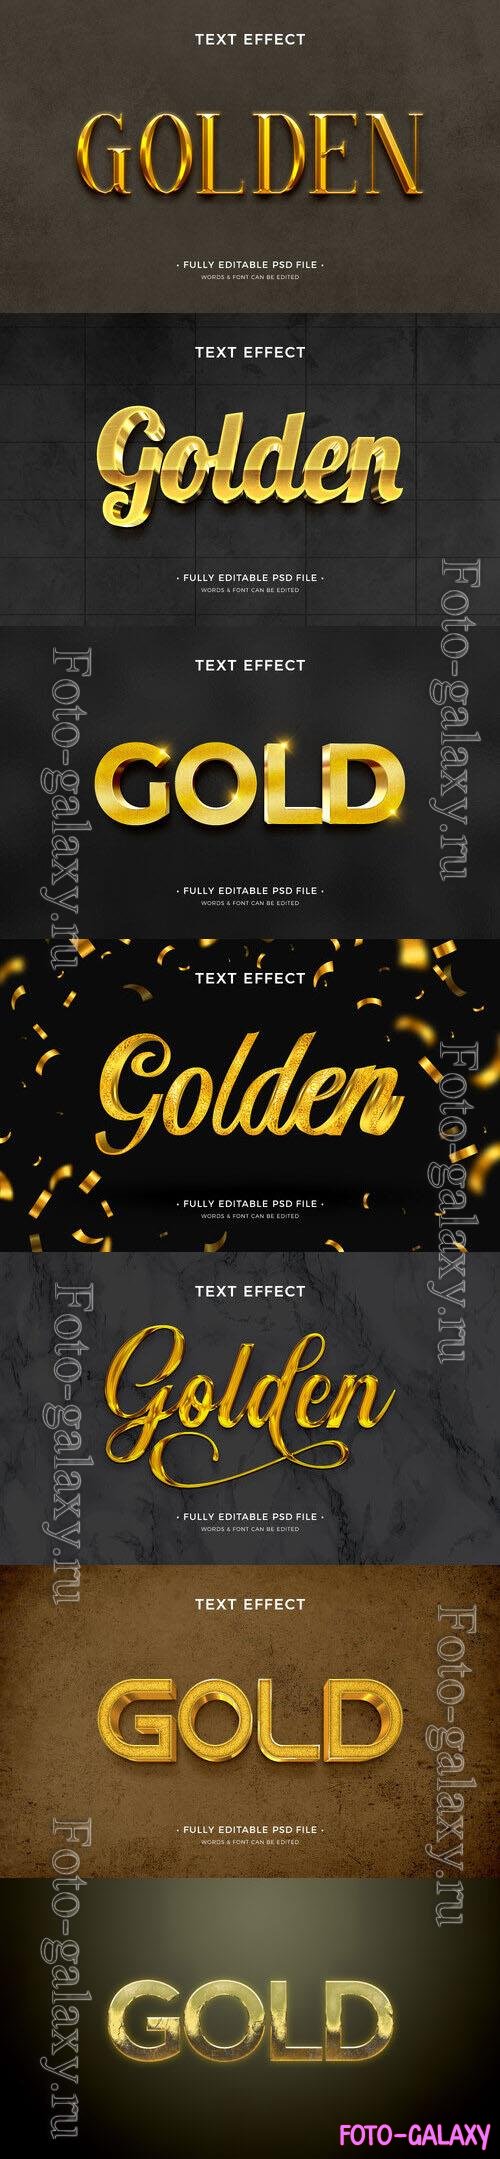 Psd style text effect editable set vol 436 